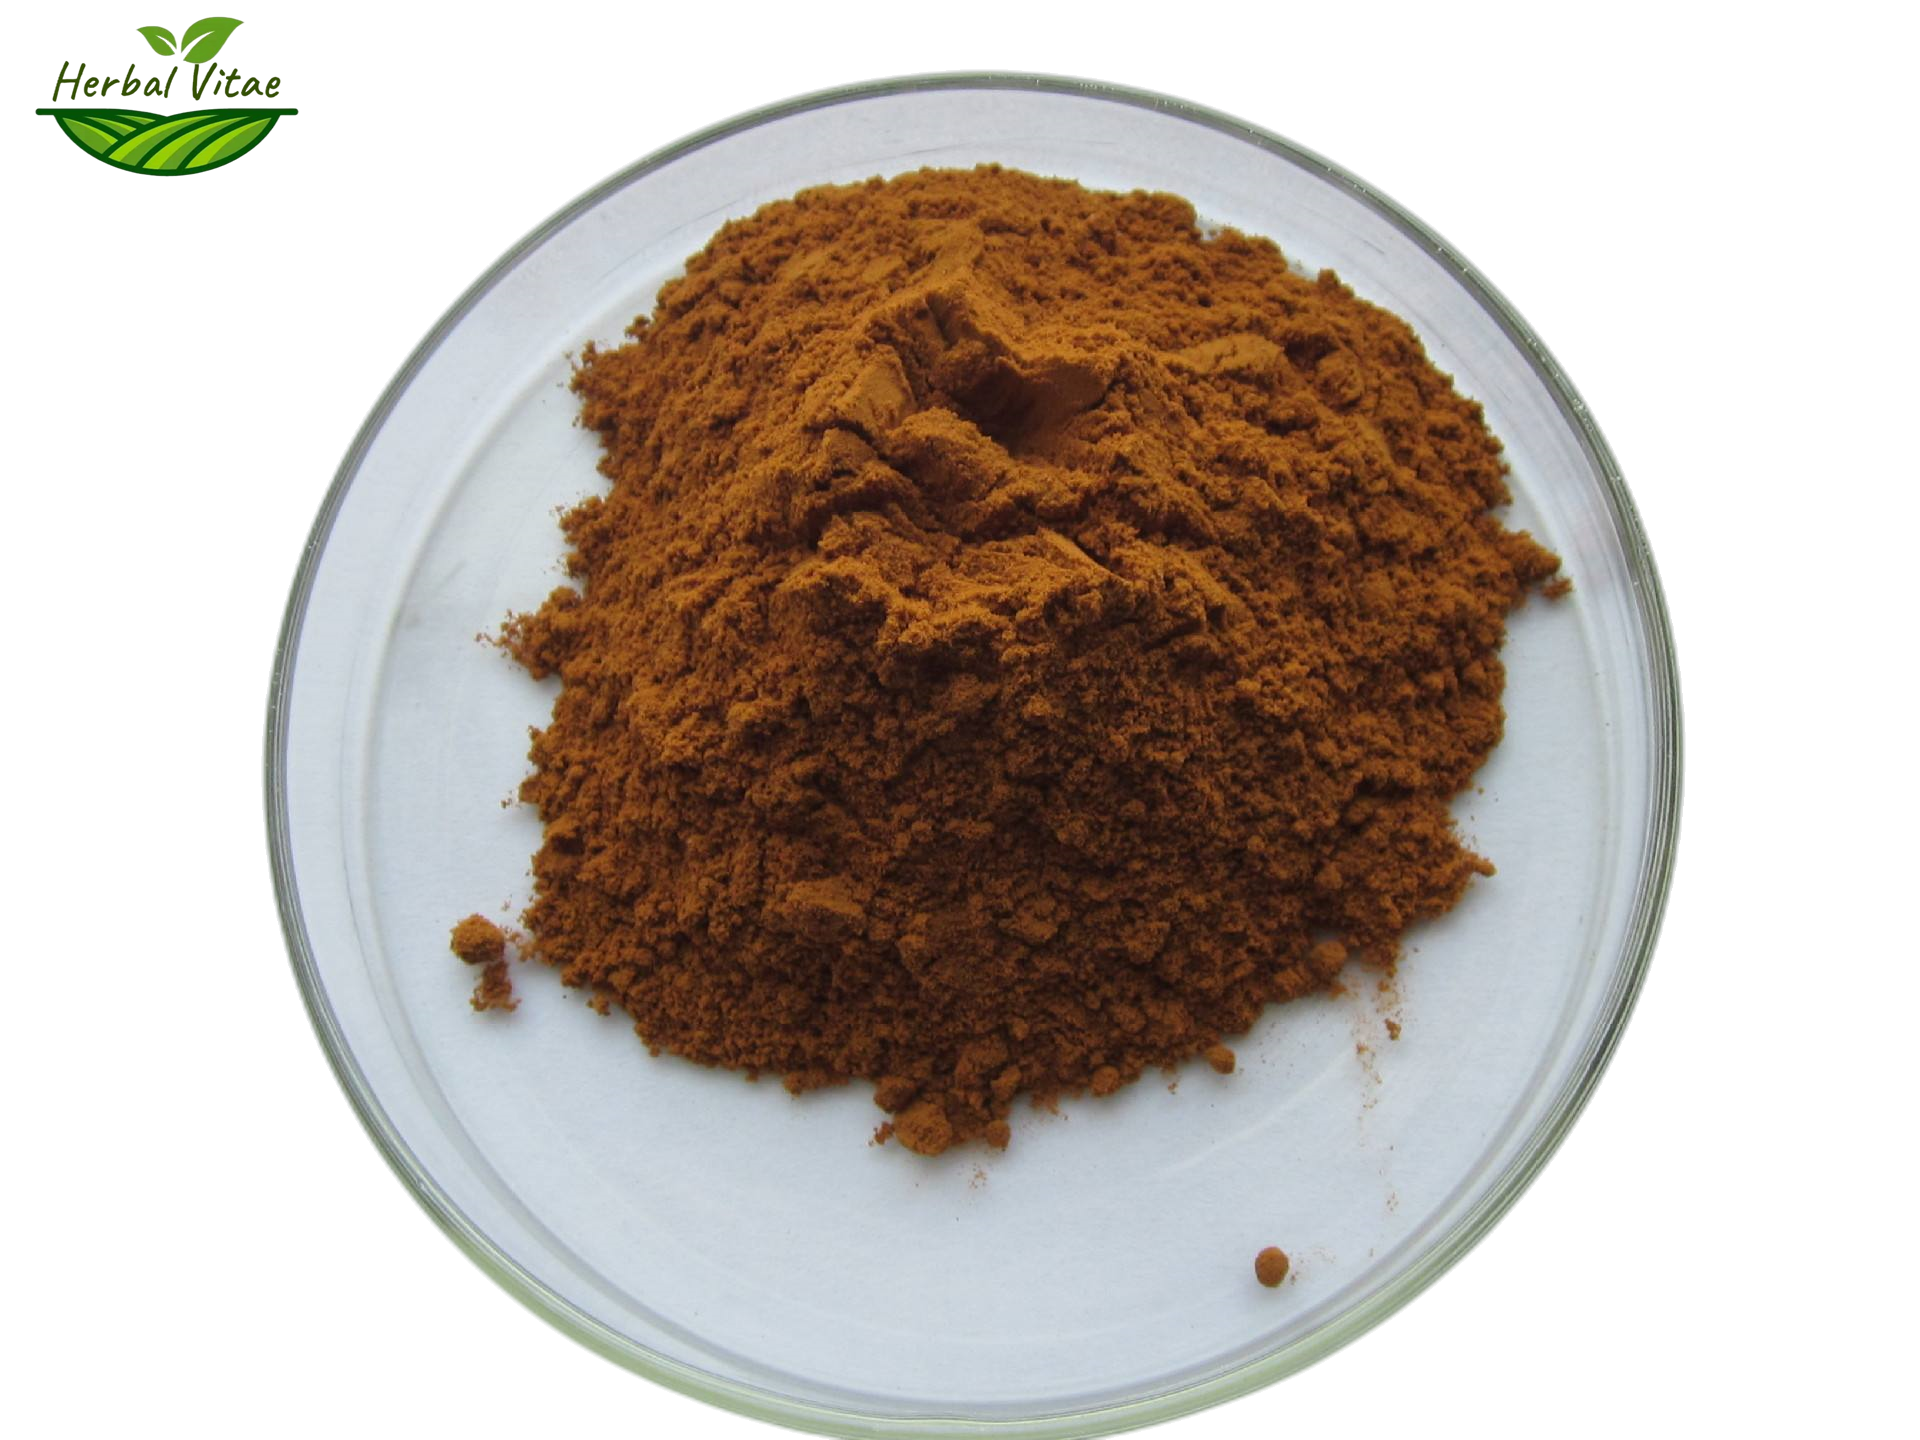 Rhodiola Rosea Extract Powder